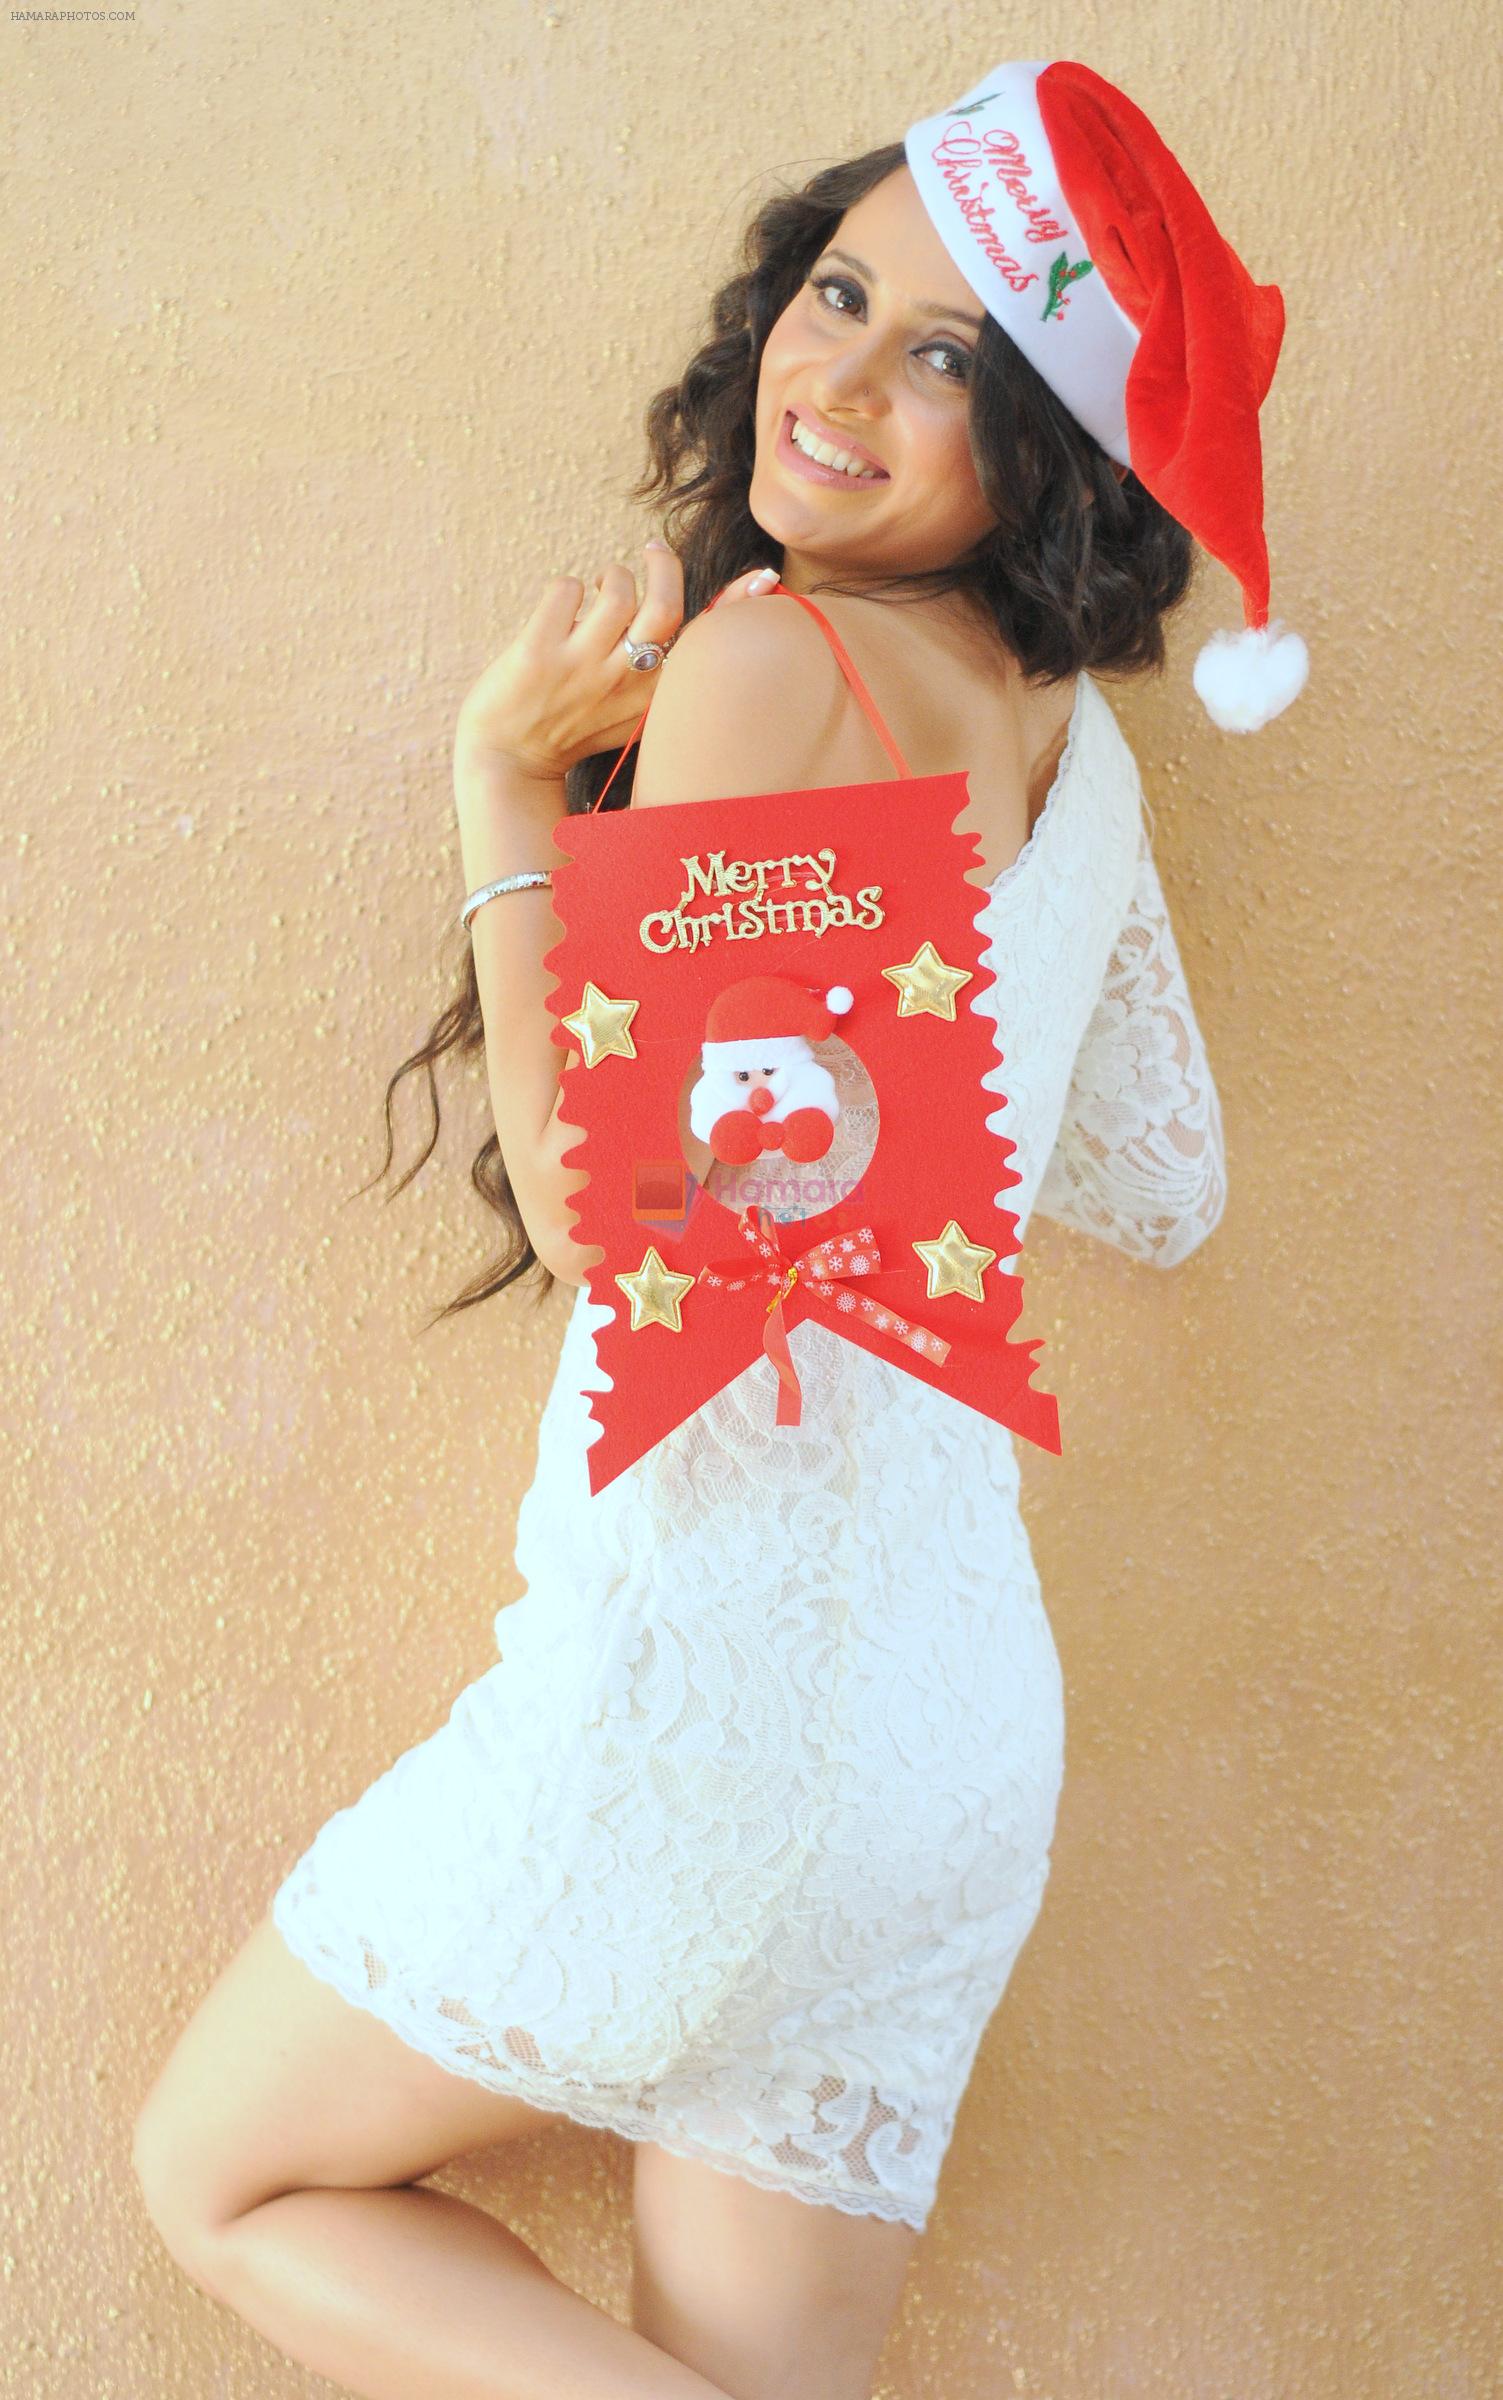 Shweta Khanduri celebrating Christmas on 25th Dec 2014